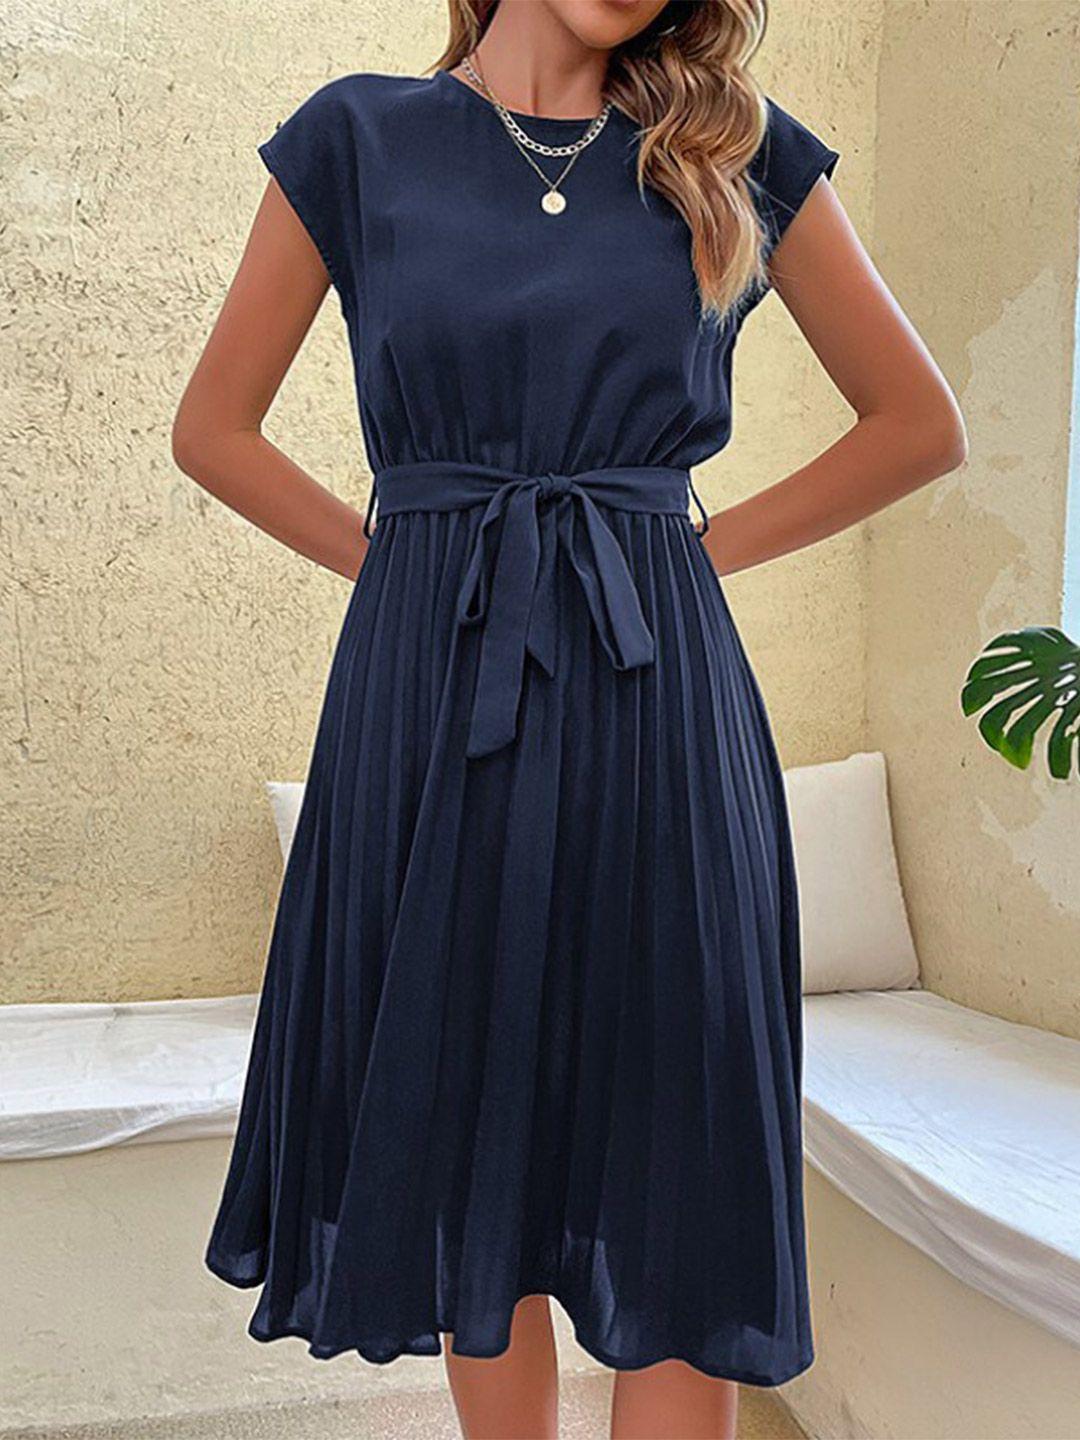 stylecast navy blue midi dress